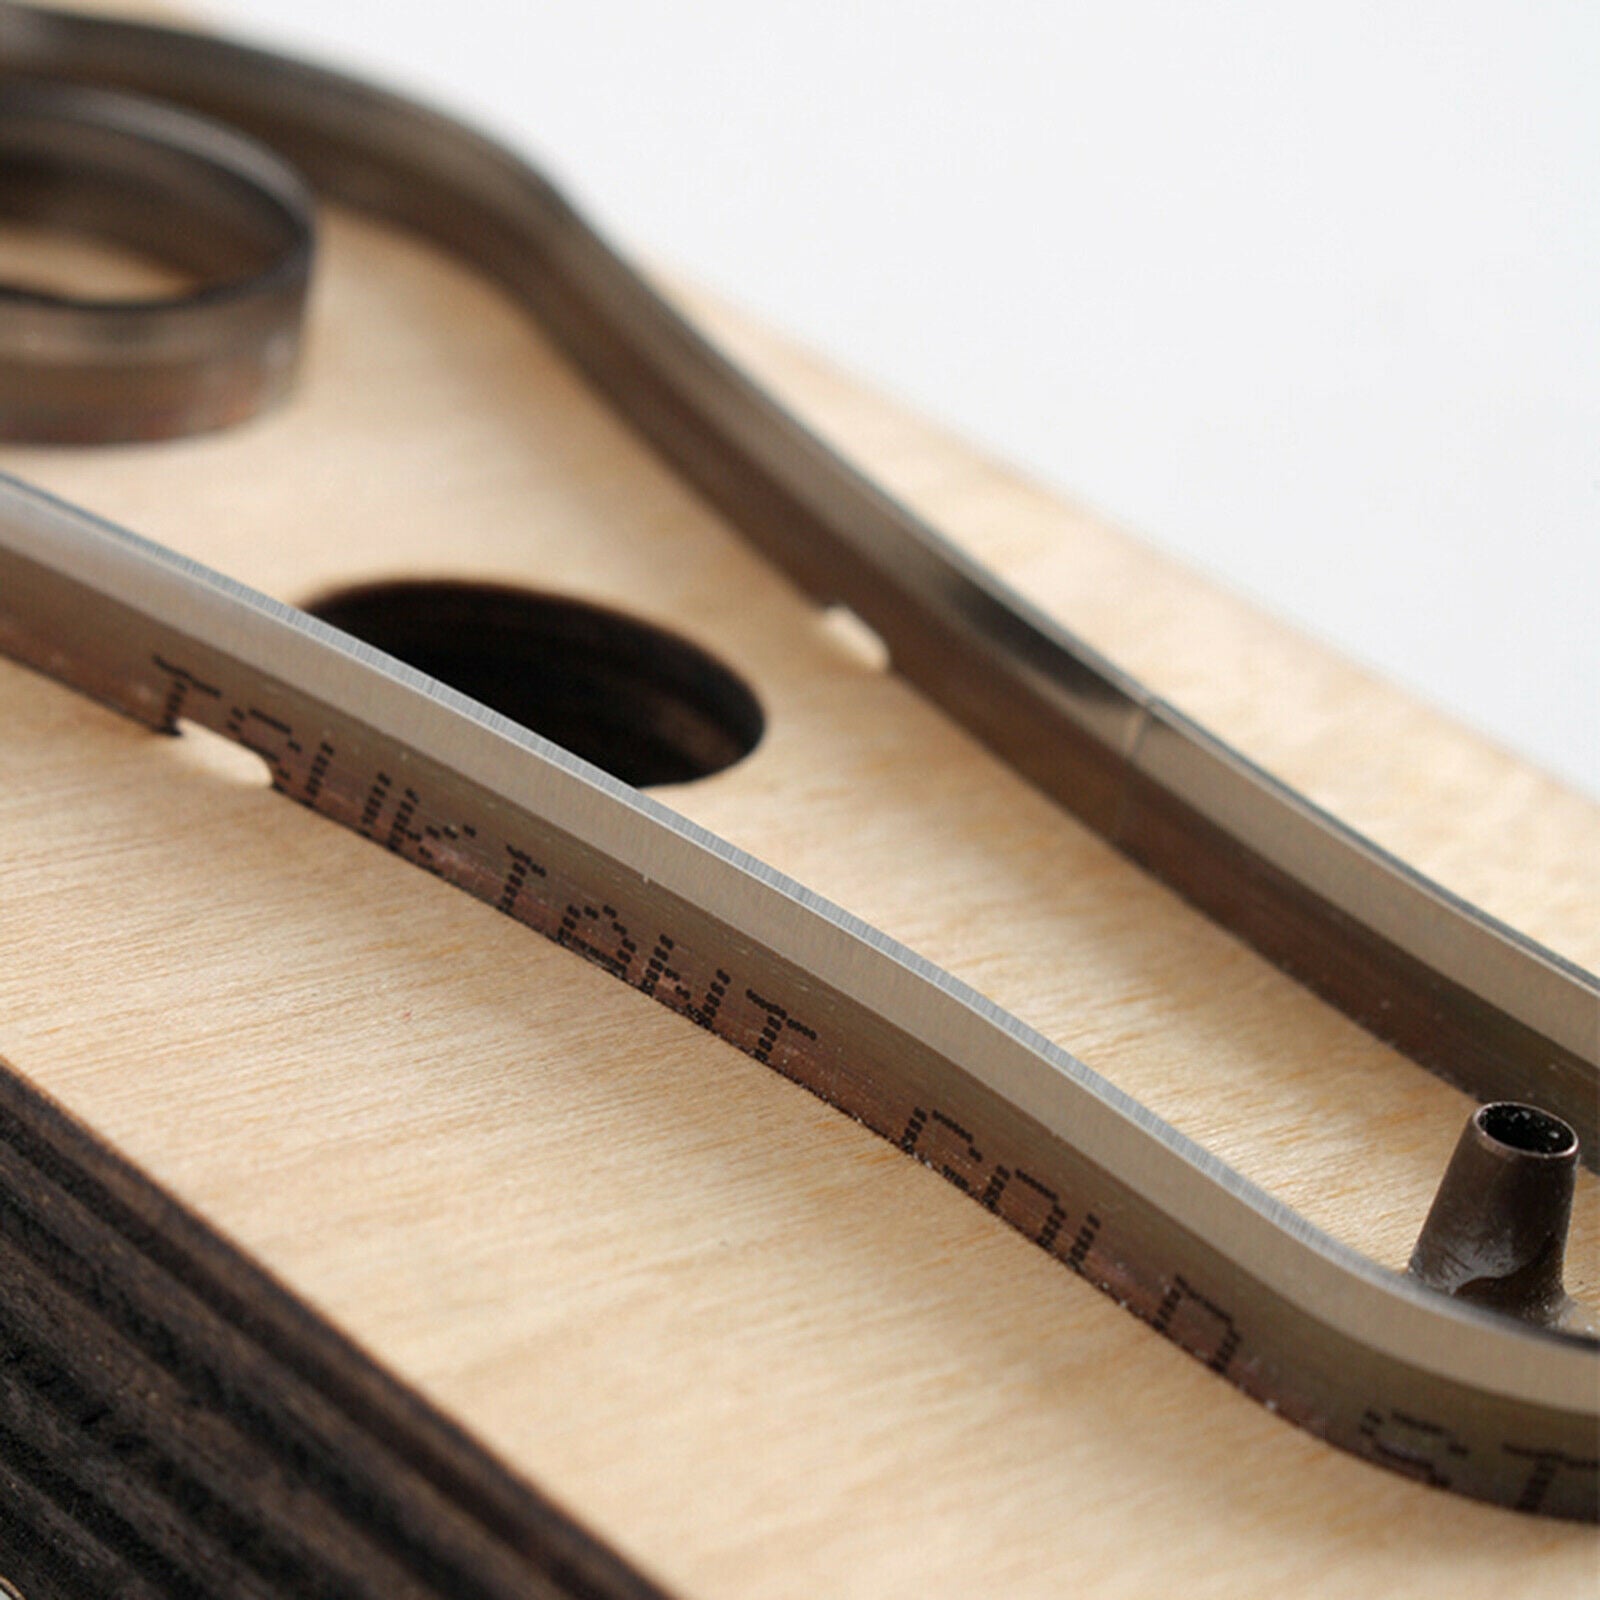 Leather Cutting Dies Sunglasses Chain Holder Cut Mold Making Stencil Templates